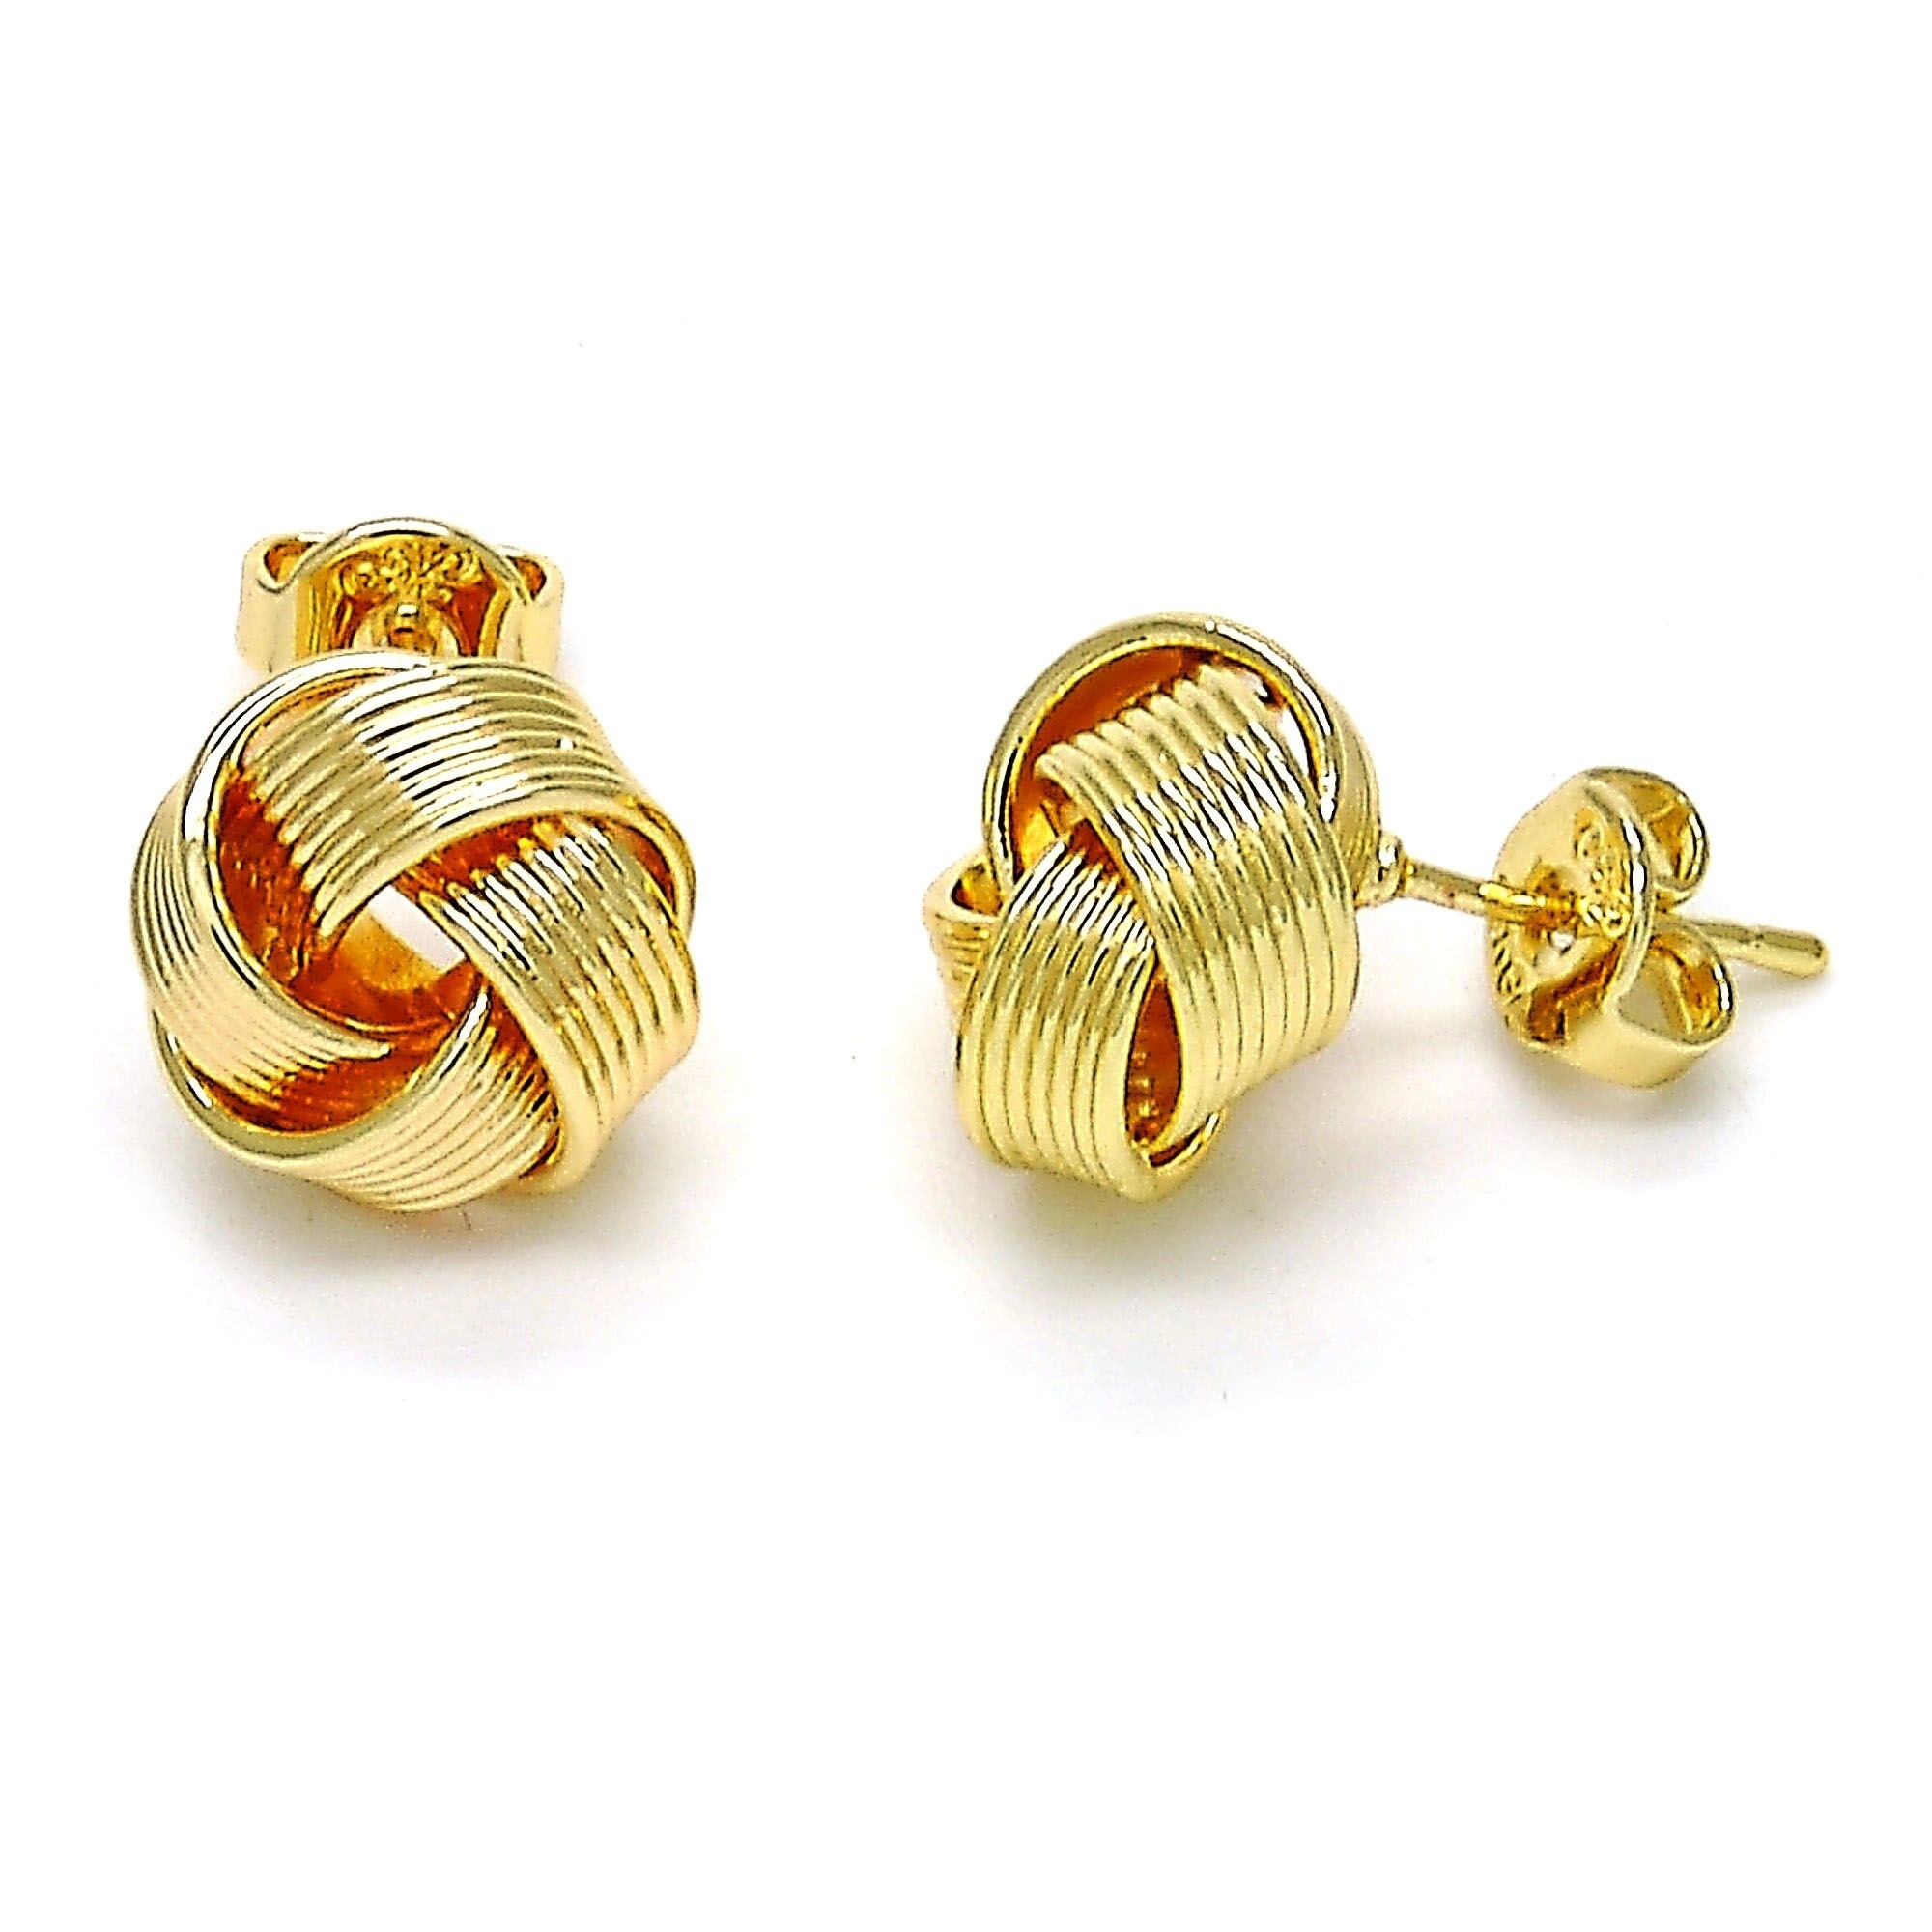 Gold Filled High Polish Finsh Stud Earring, Love Knot Design, Slightly Brushed Finish, Golden Tone